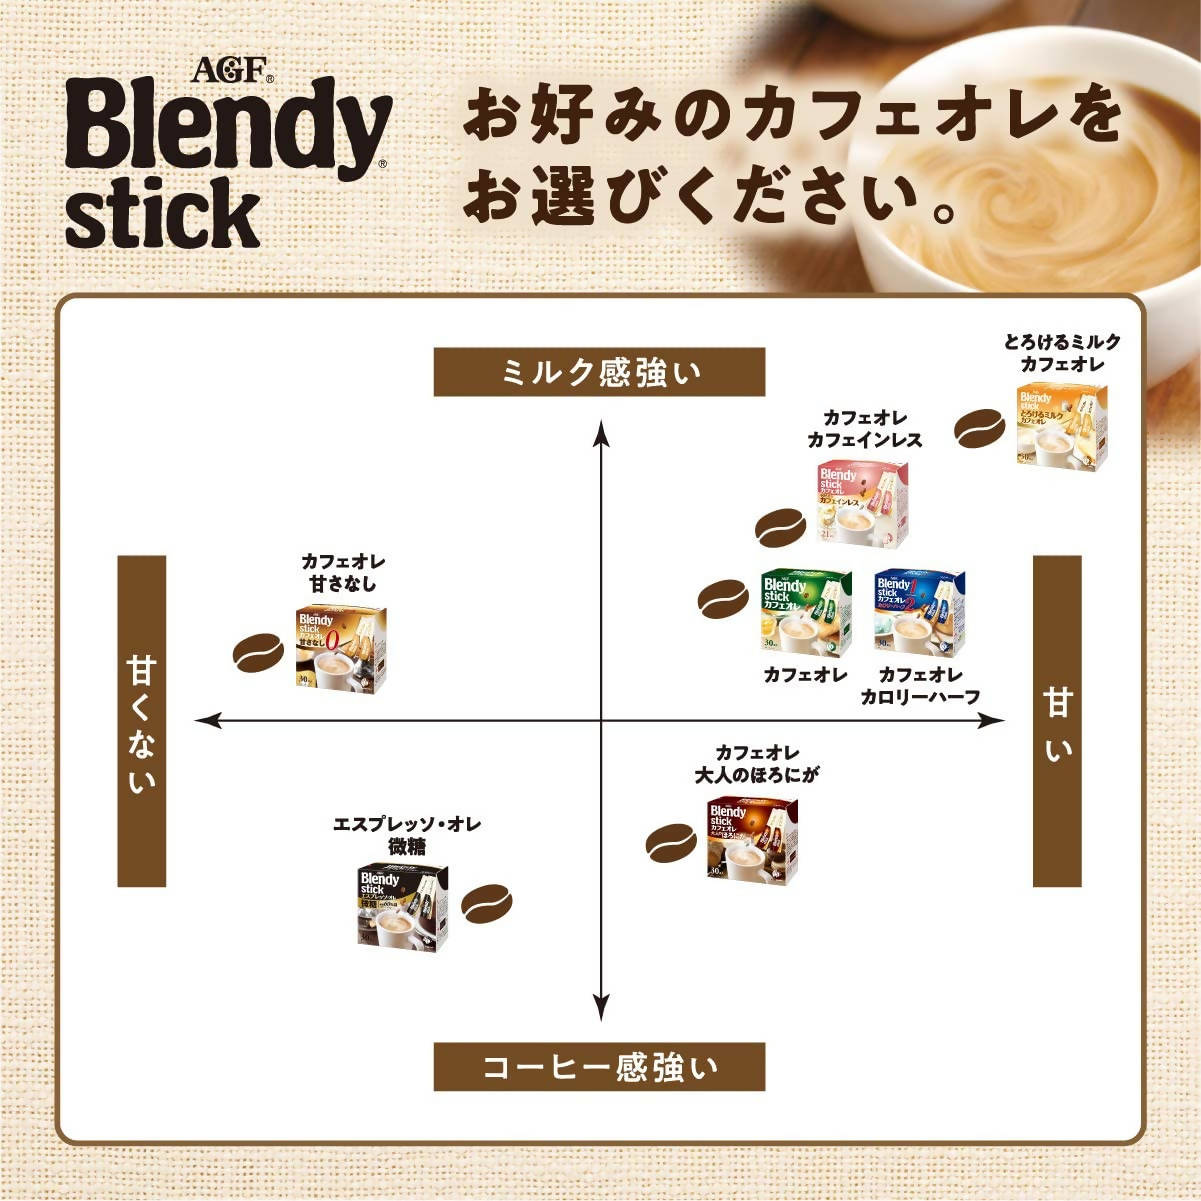 (AGF) Blendy Stick Cafe Au Lait (Original) Instant Coffee 2 sticks